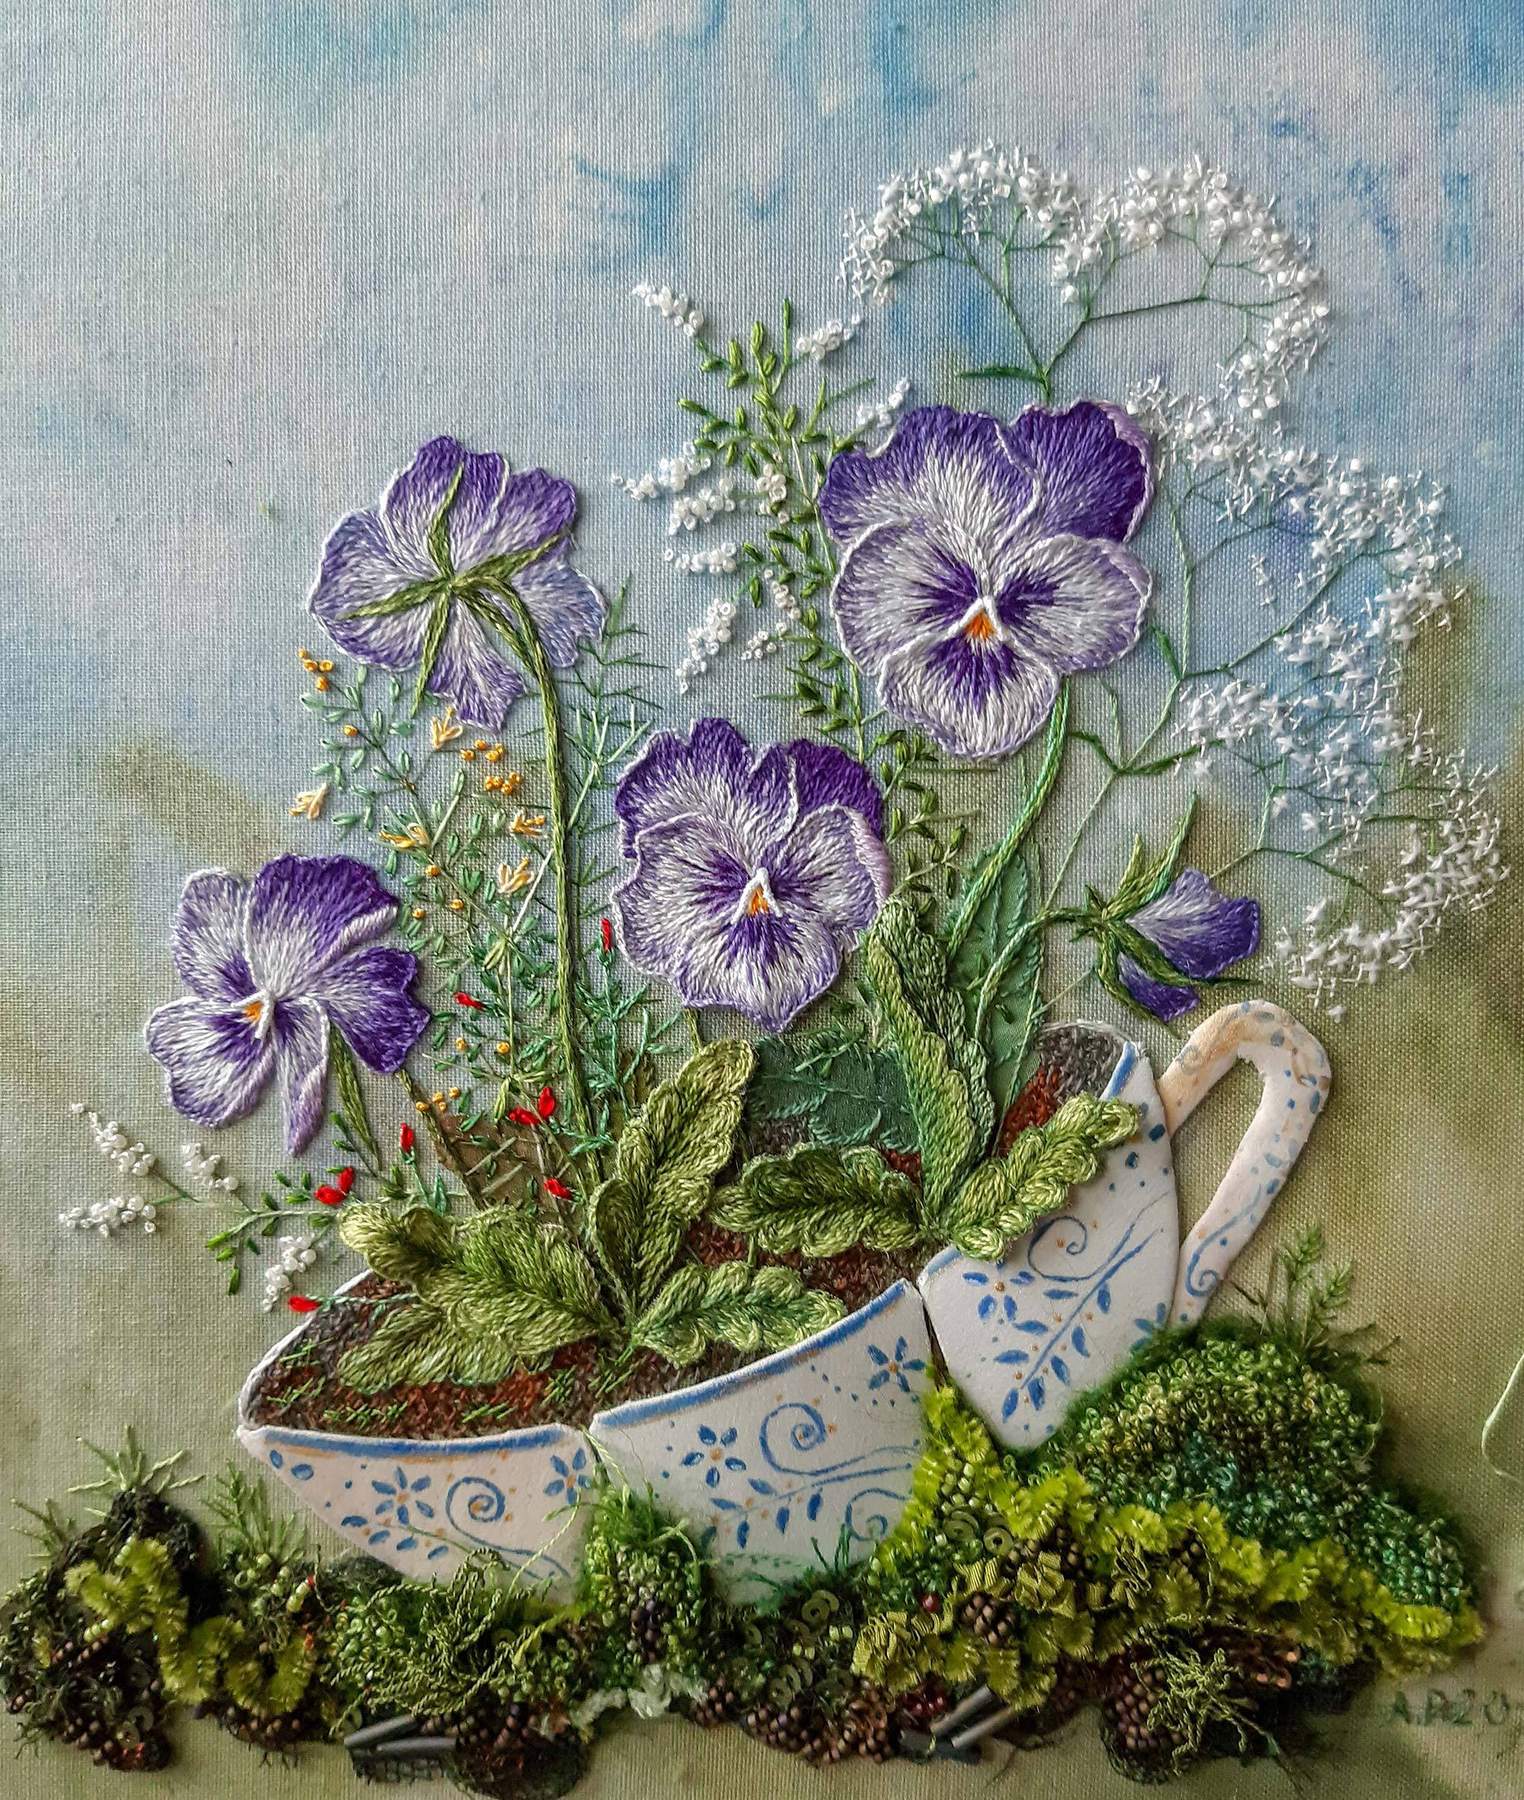 Rosa Andreeva’s Embroidery